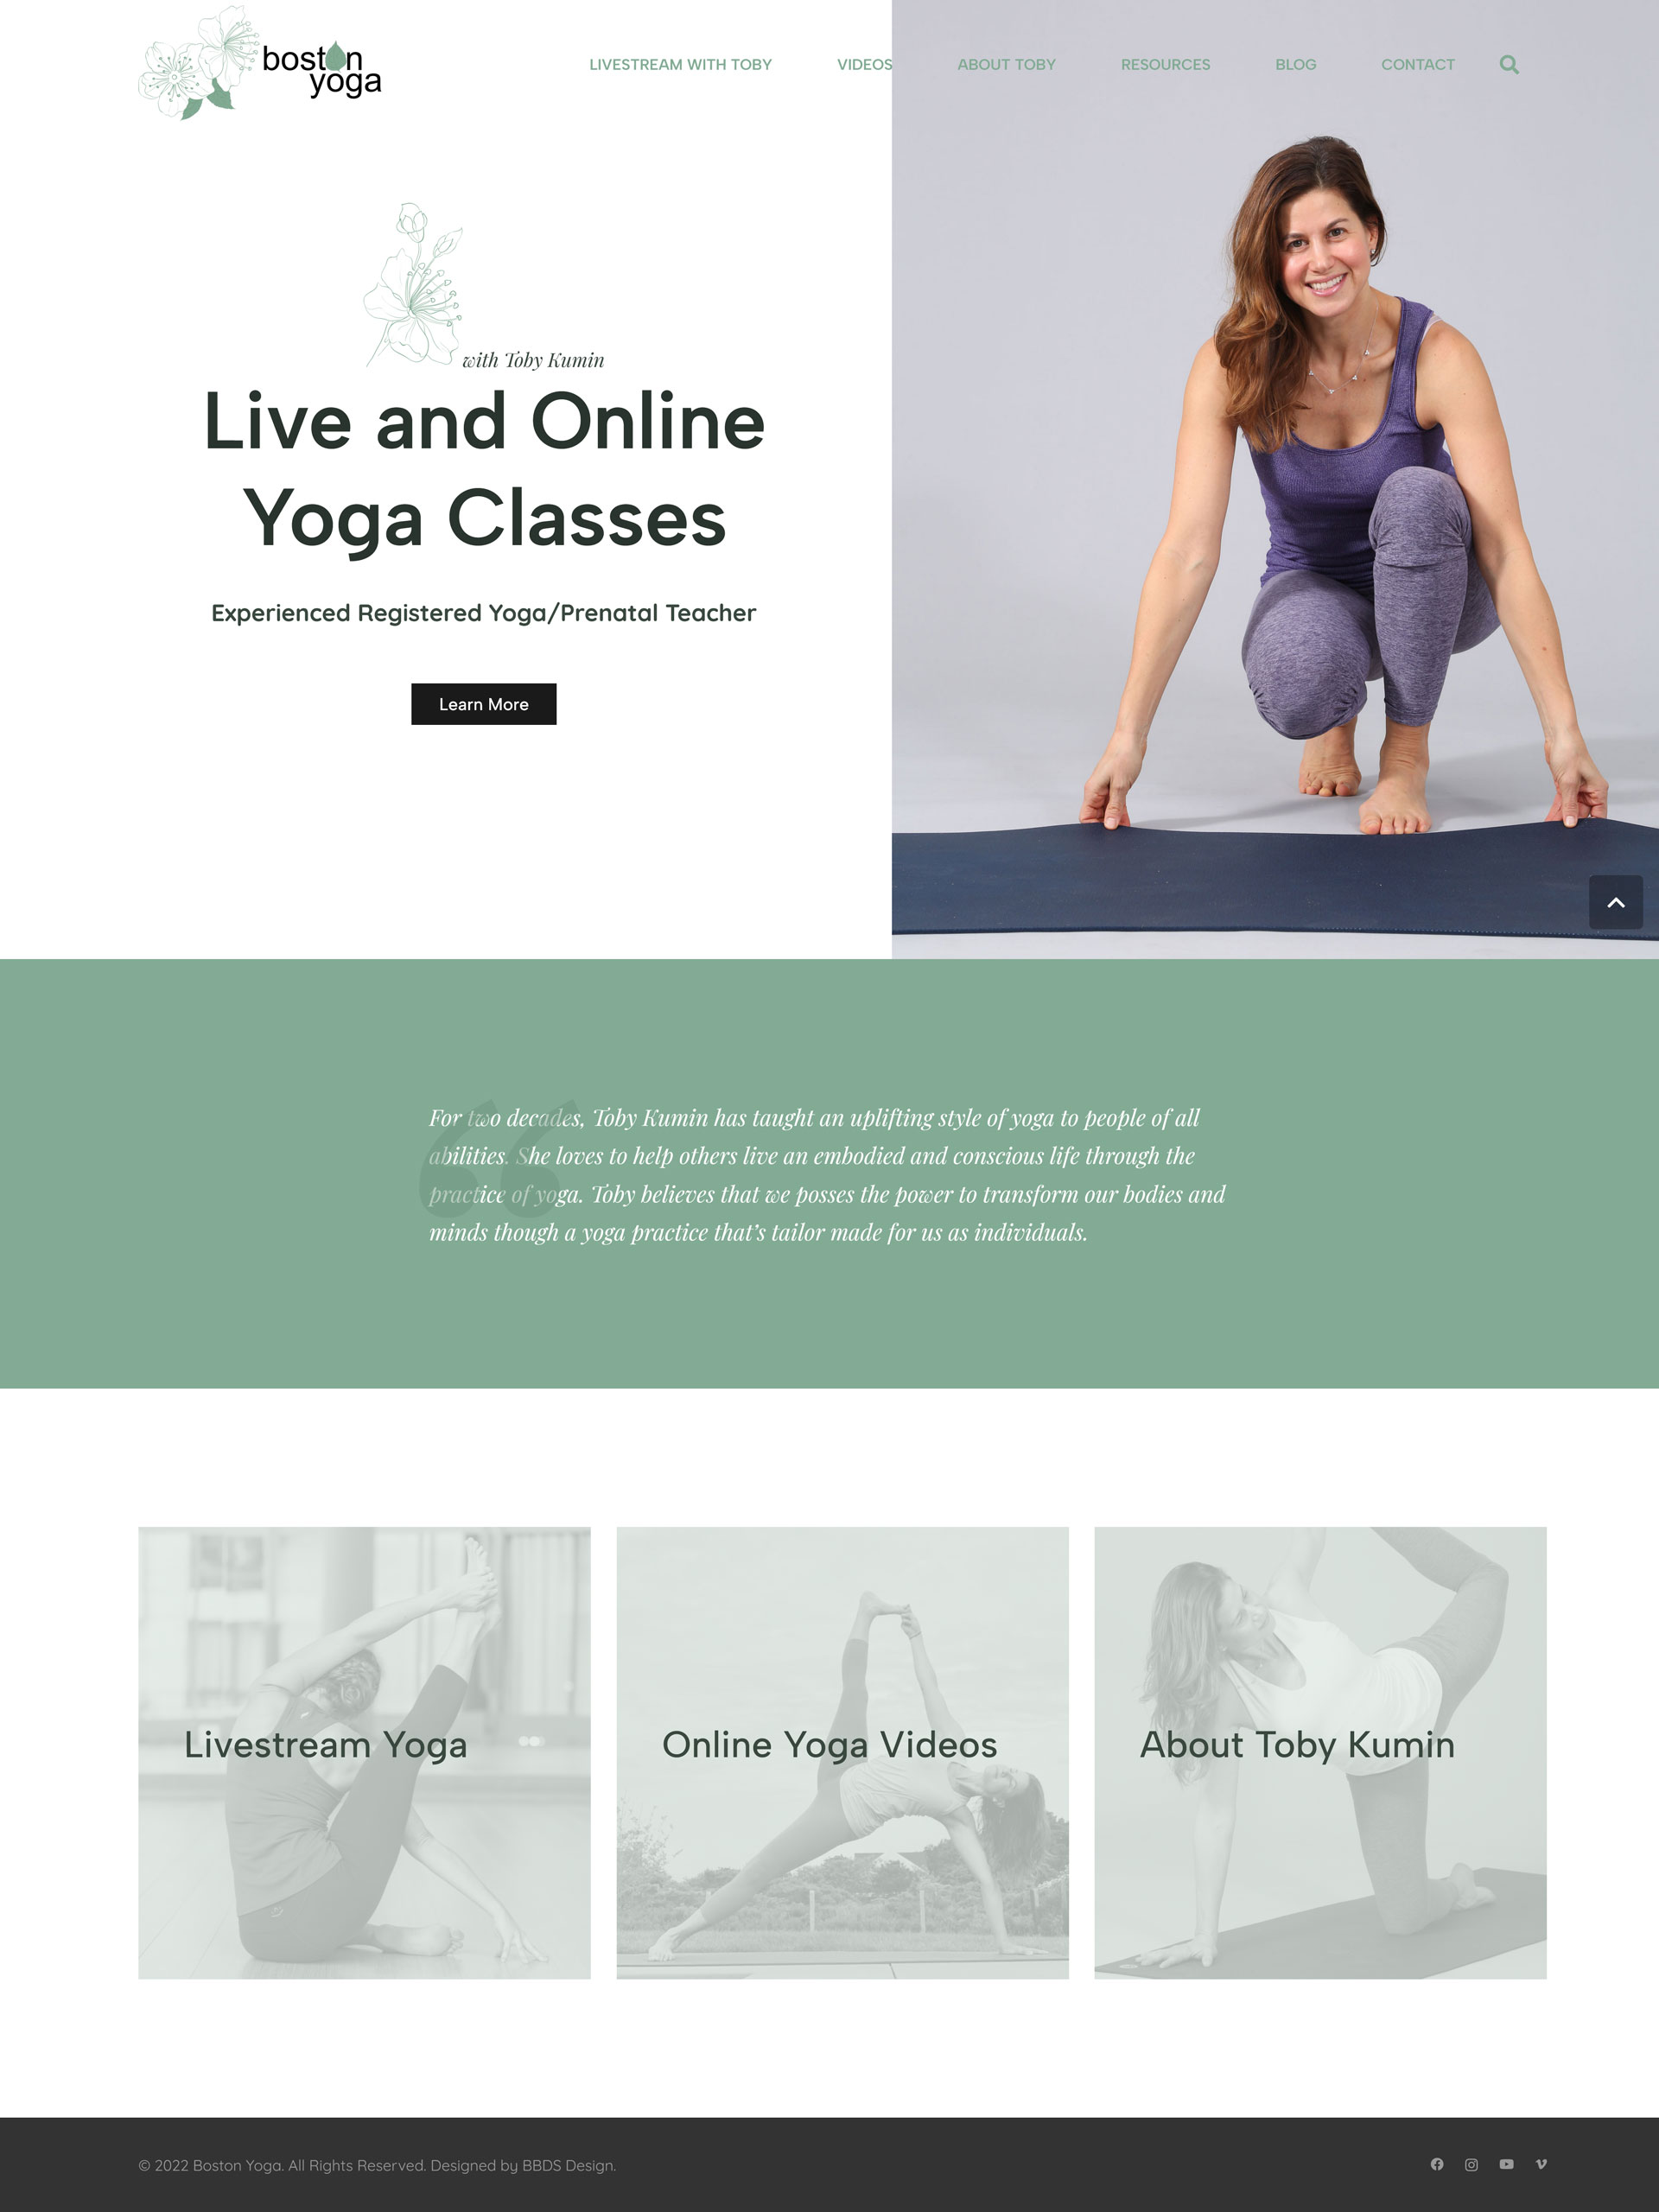 Yoga Instructor website – bostonyoga.com